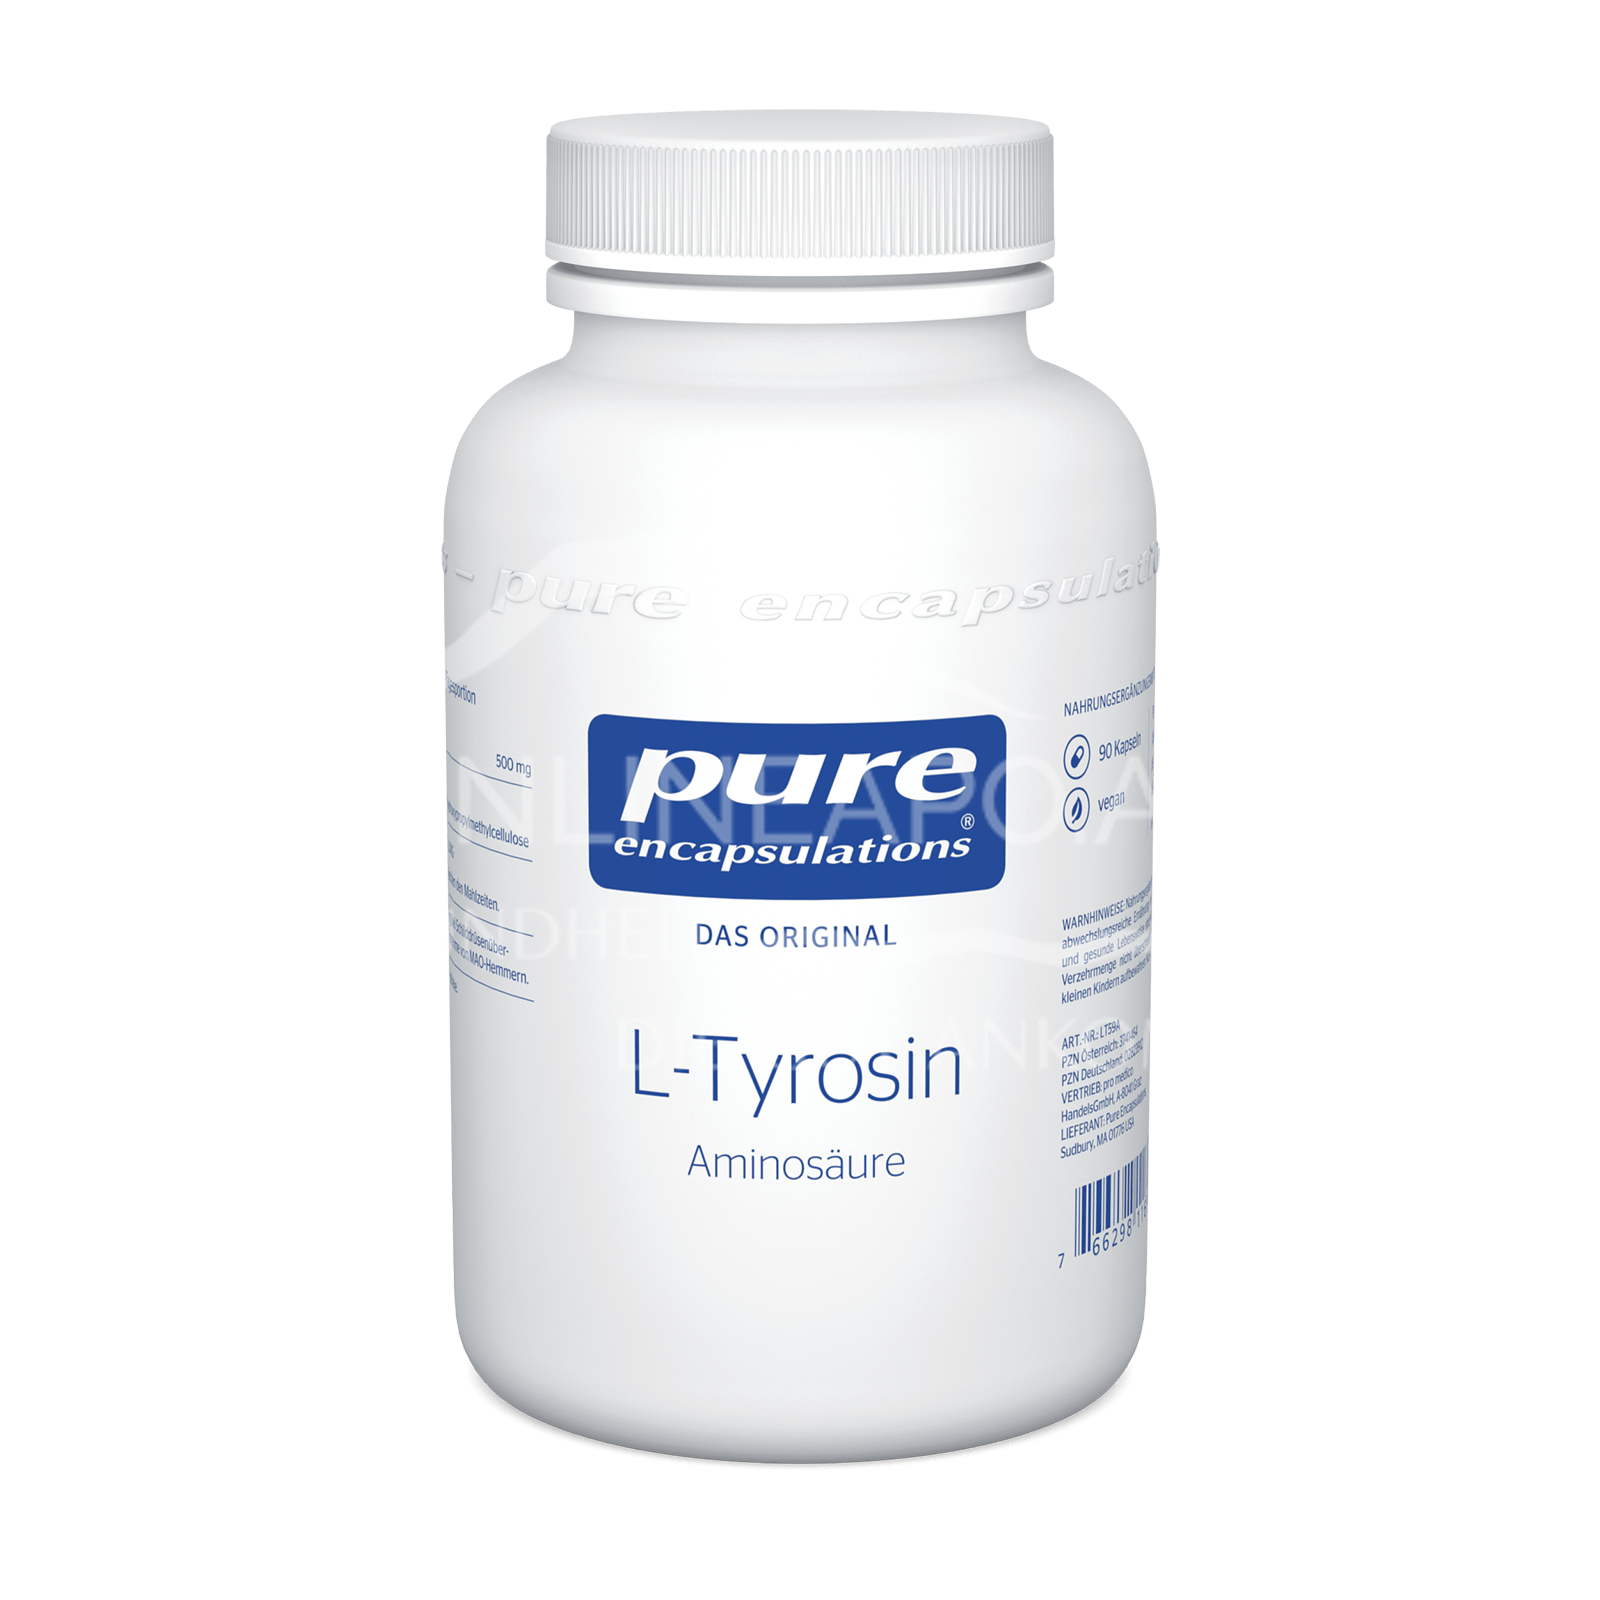 pure encapsulations® L-Tyrosin